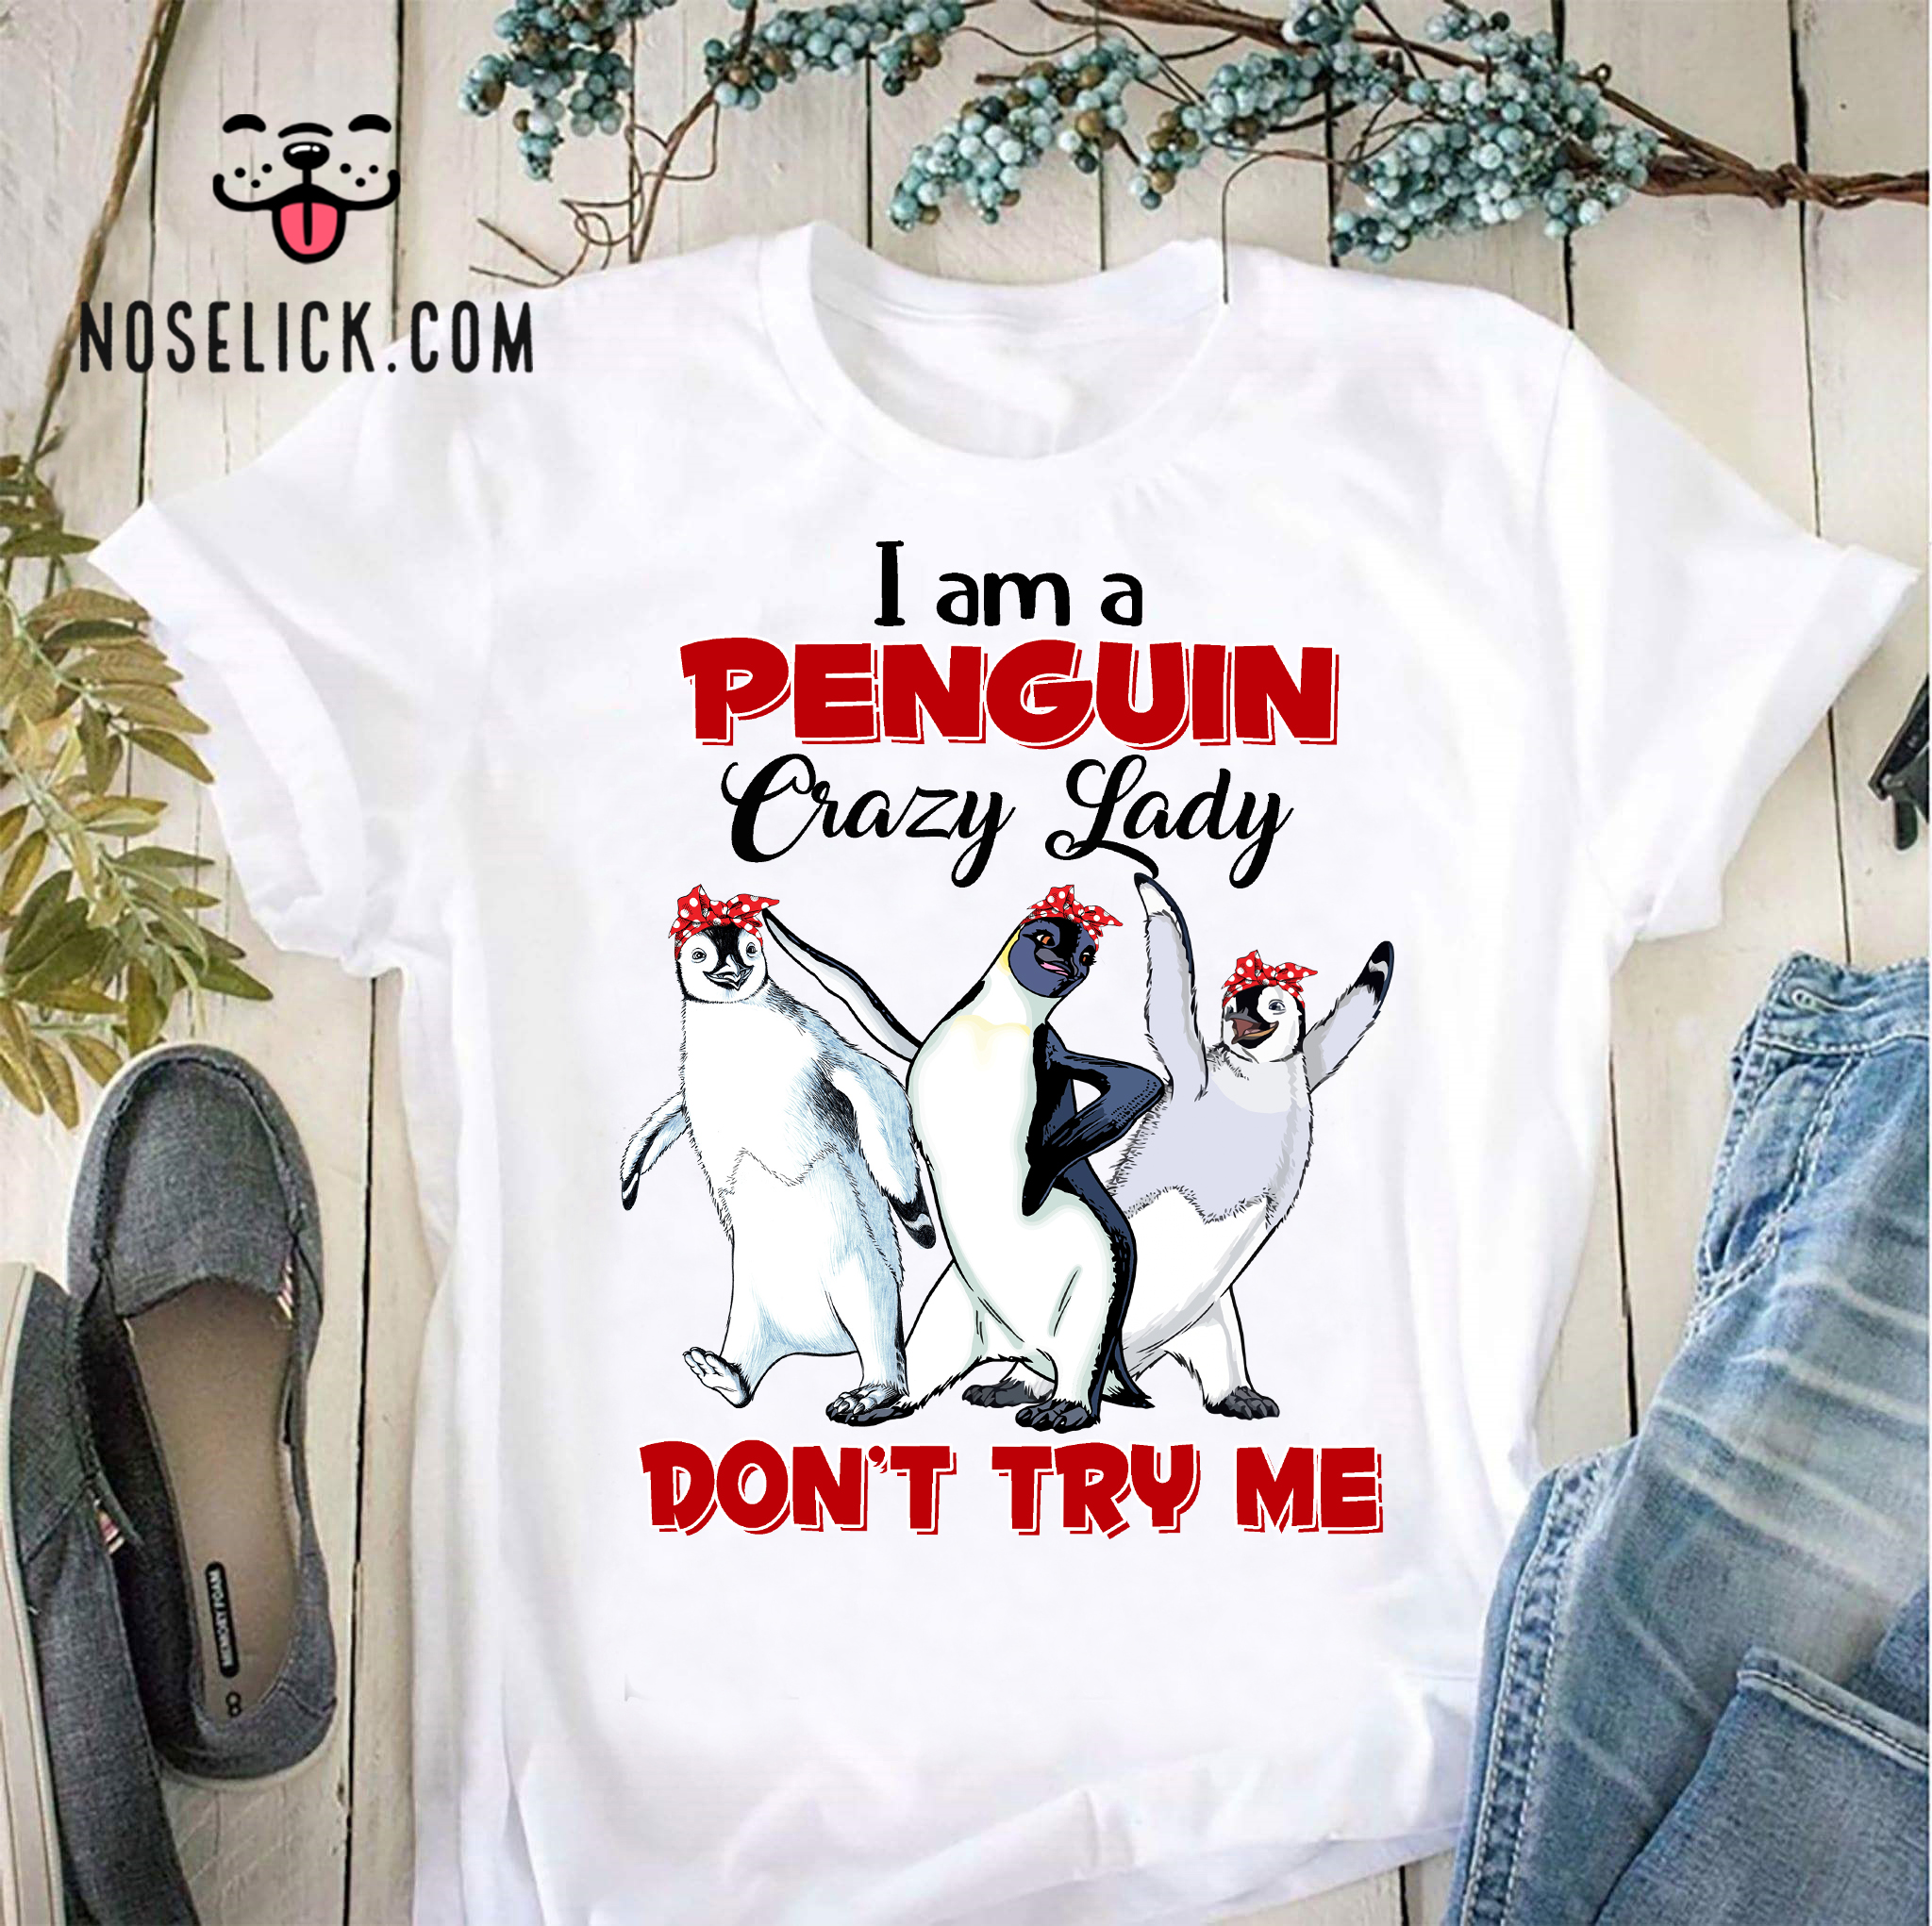 I am a penguin crazy lady don't try me - Lady penguins